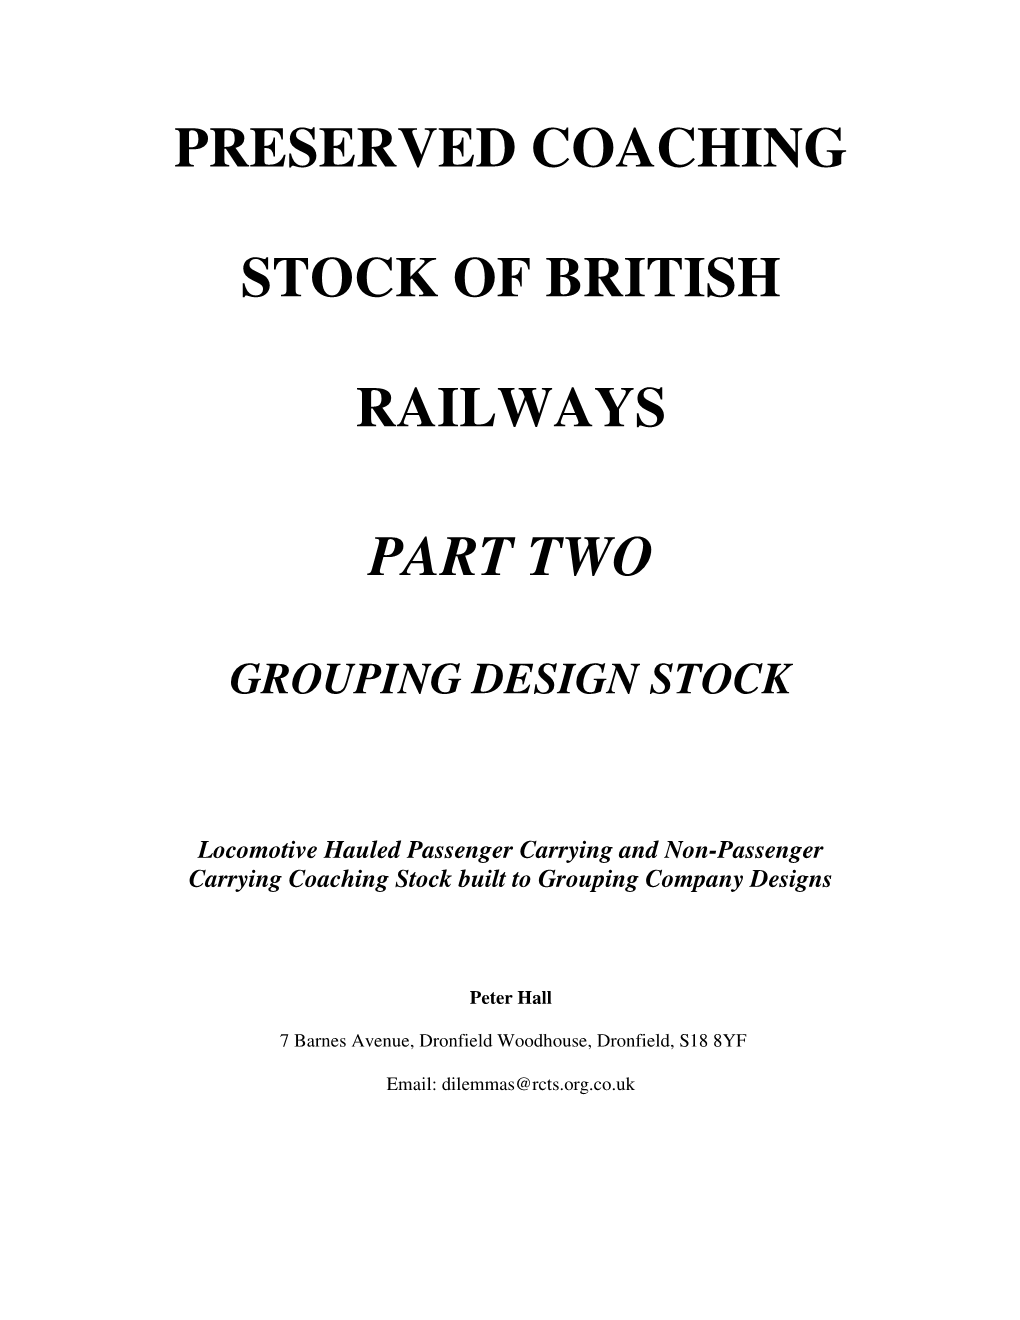 Preserved Coaching Stock of British Railways Part